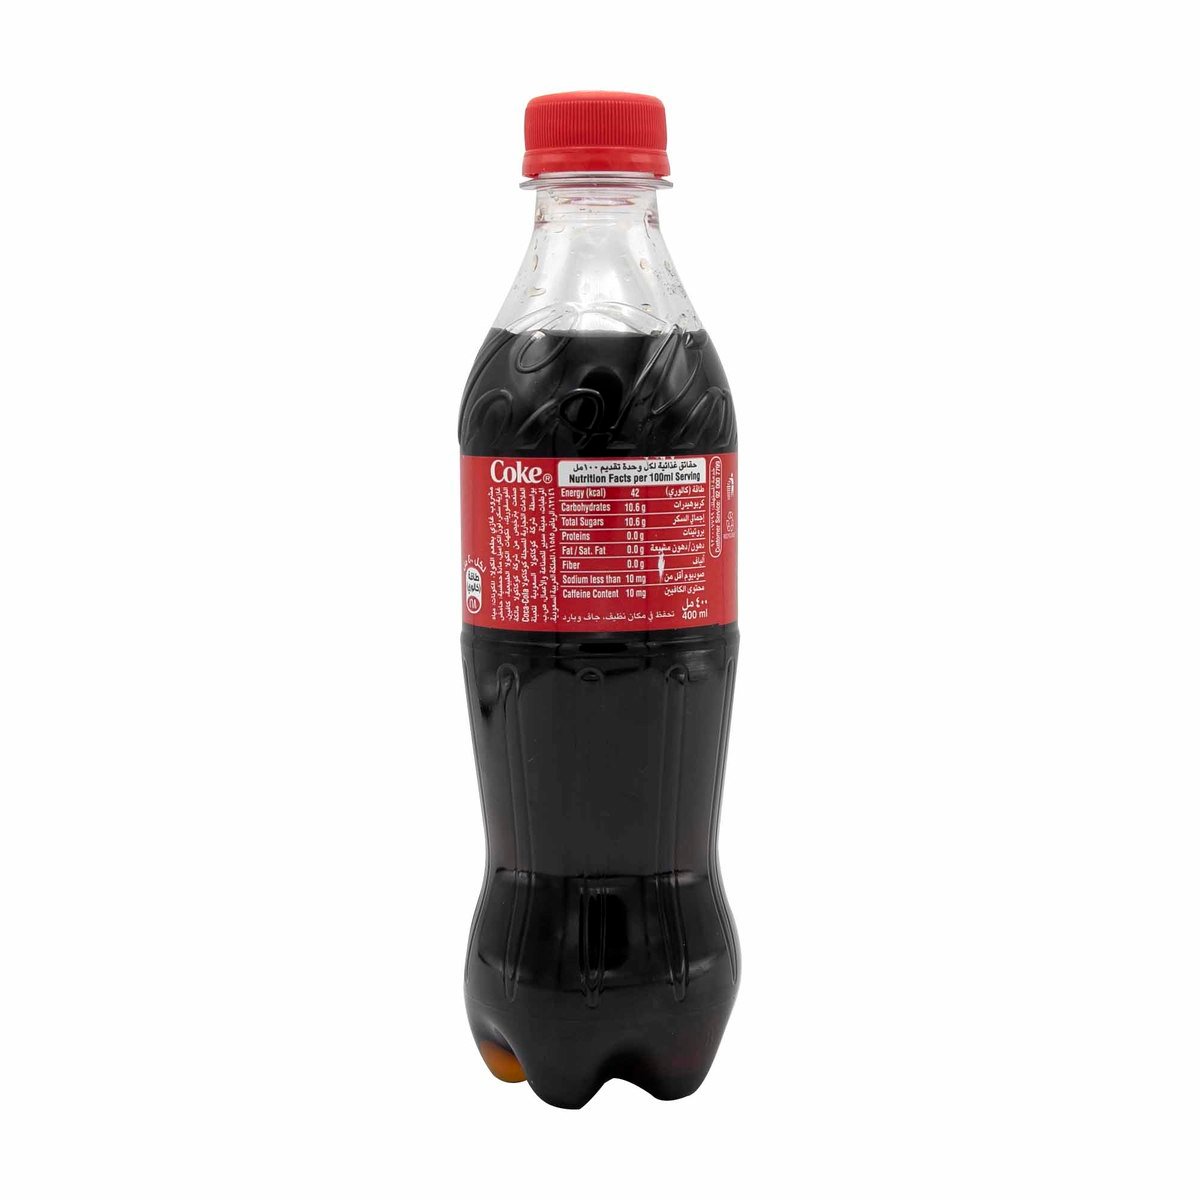 Coca Cola Original 400ml